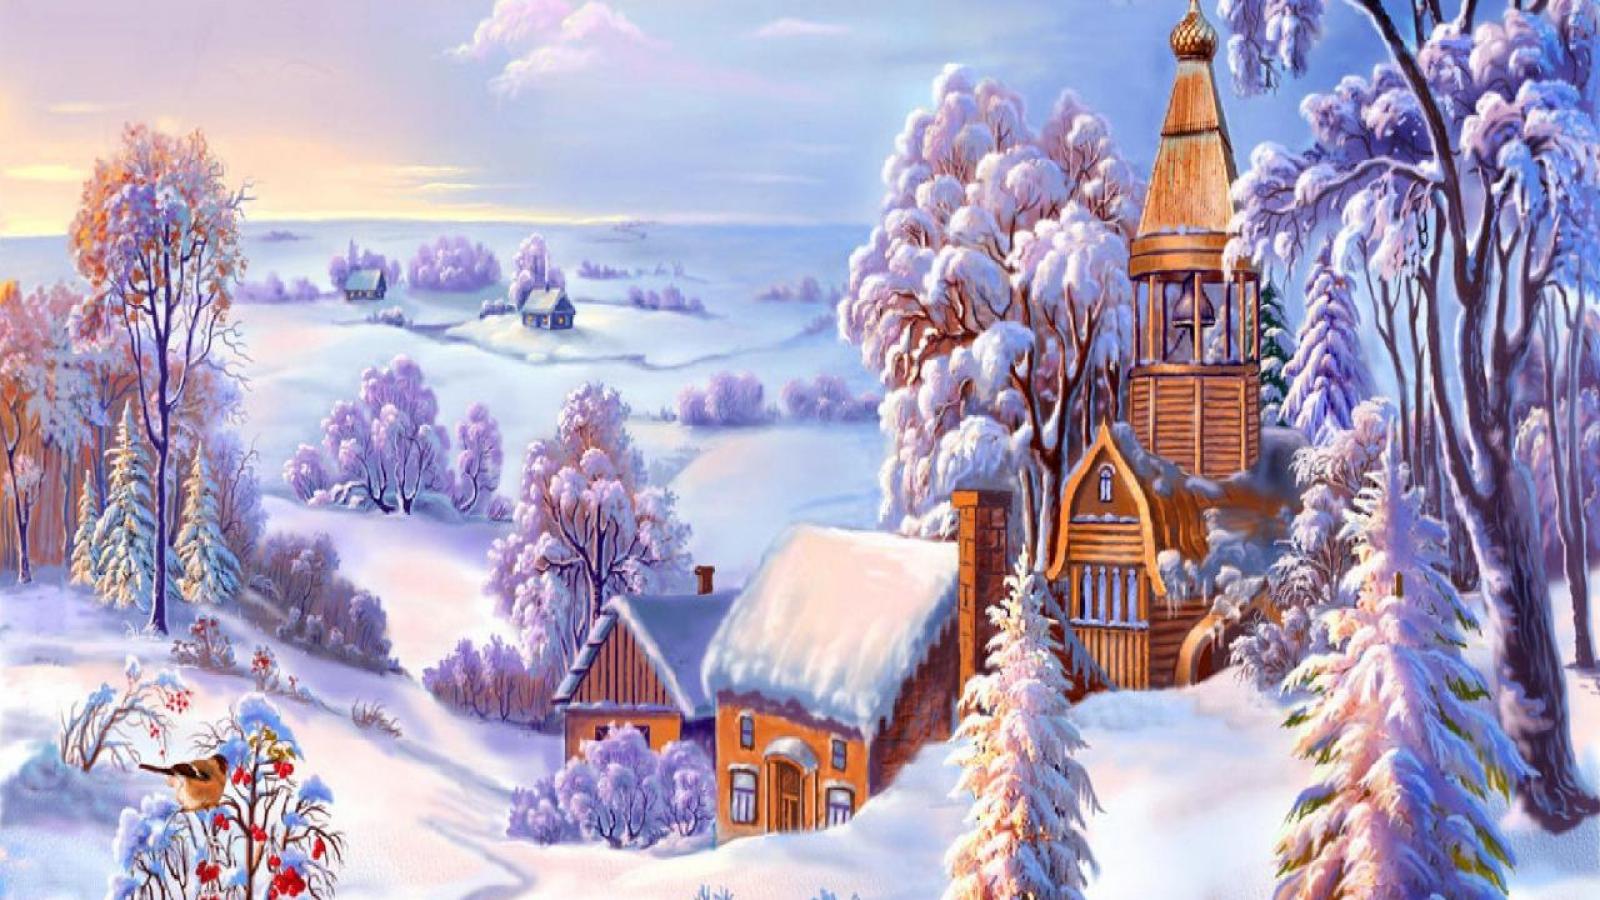 Winter wonderland - - High Quality and Resolution